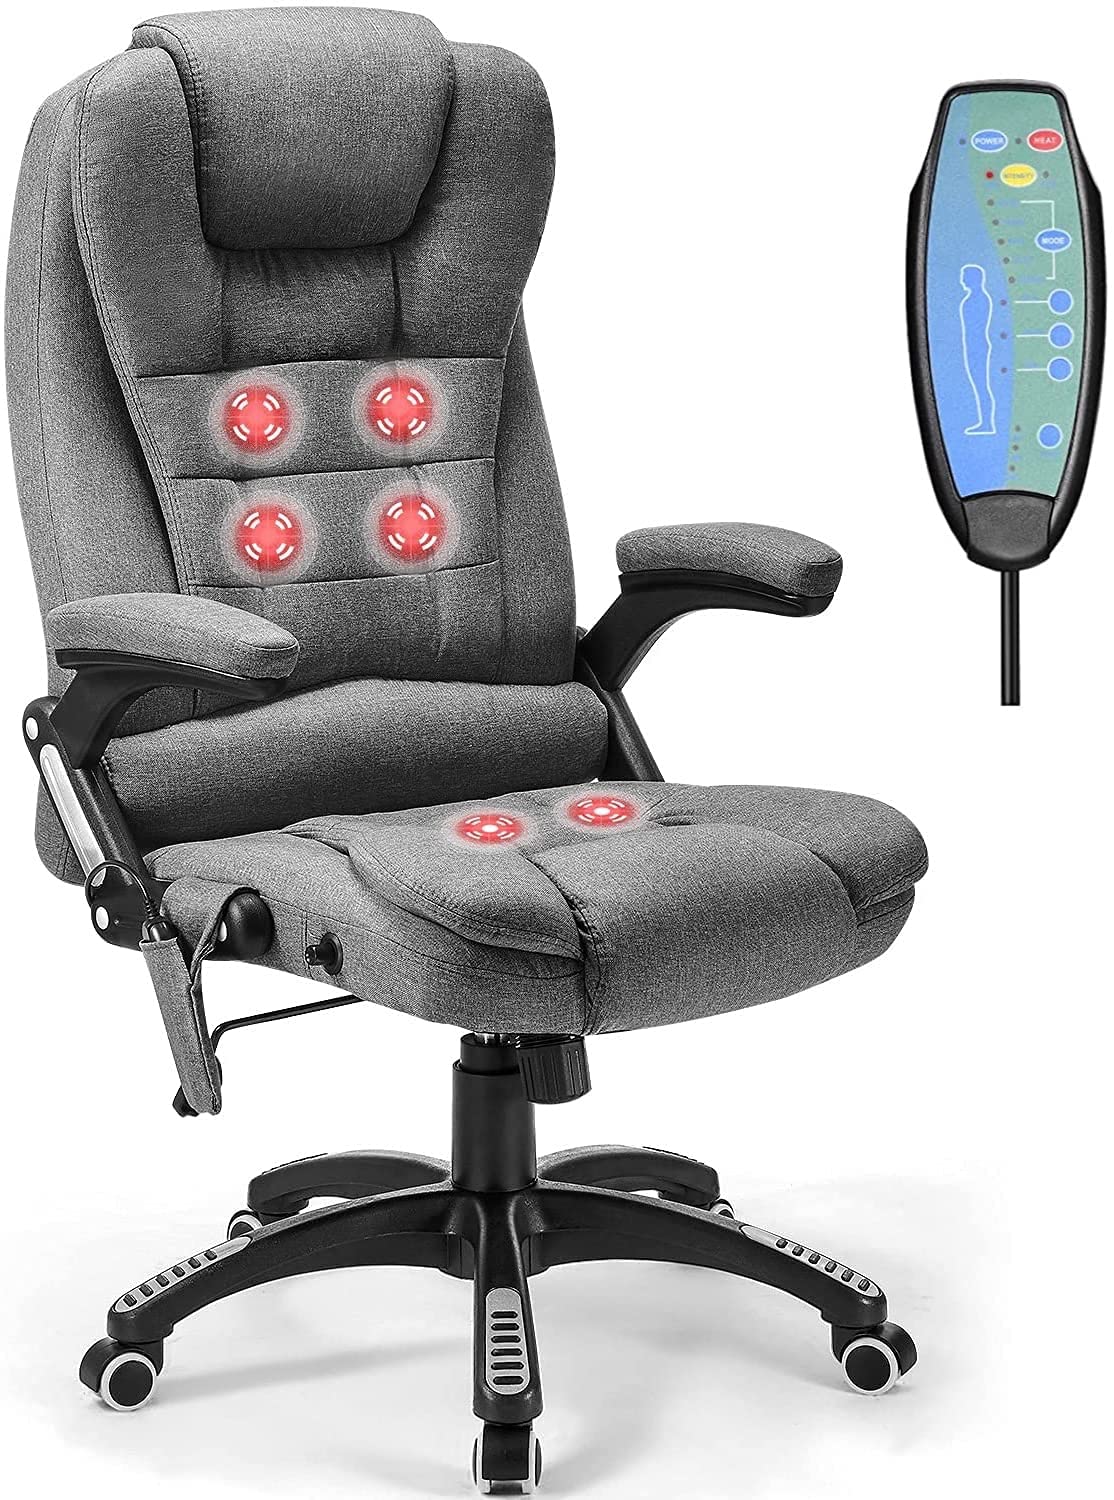 YAKEY Massage Office Chair